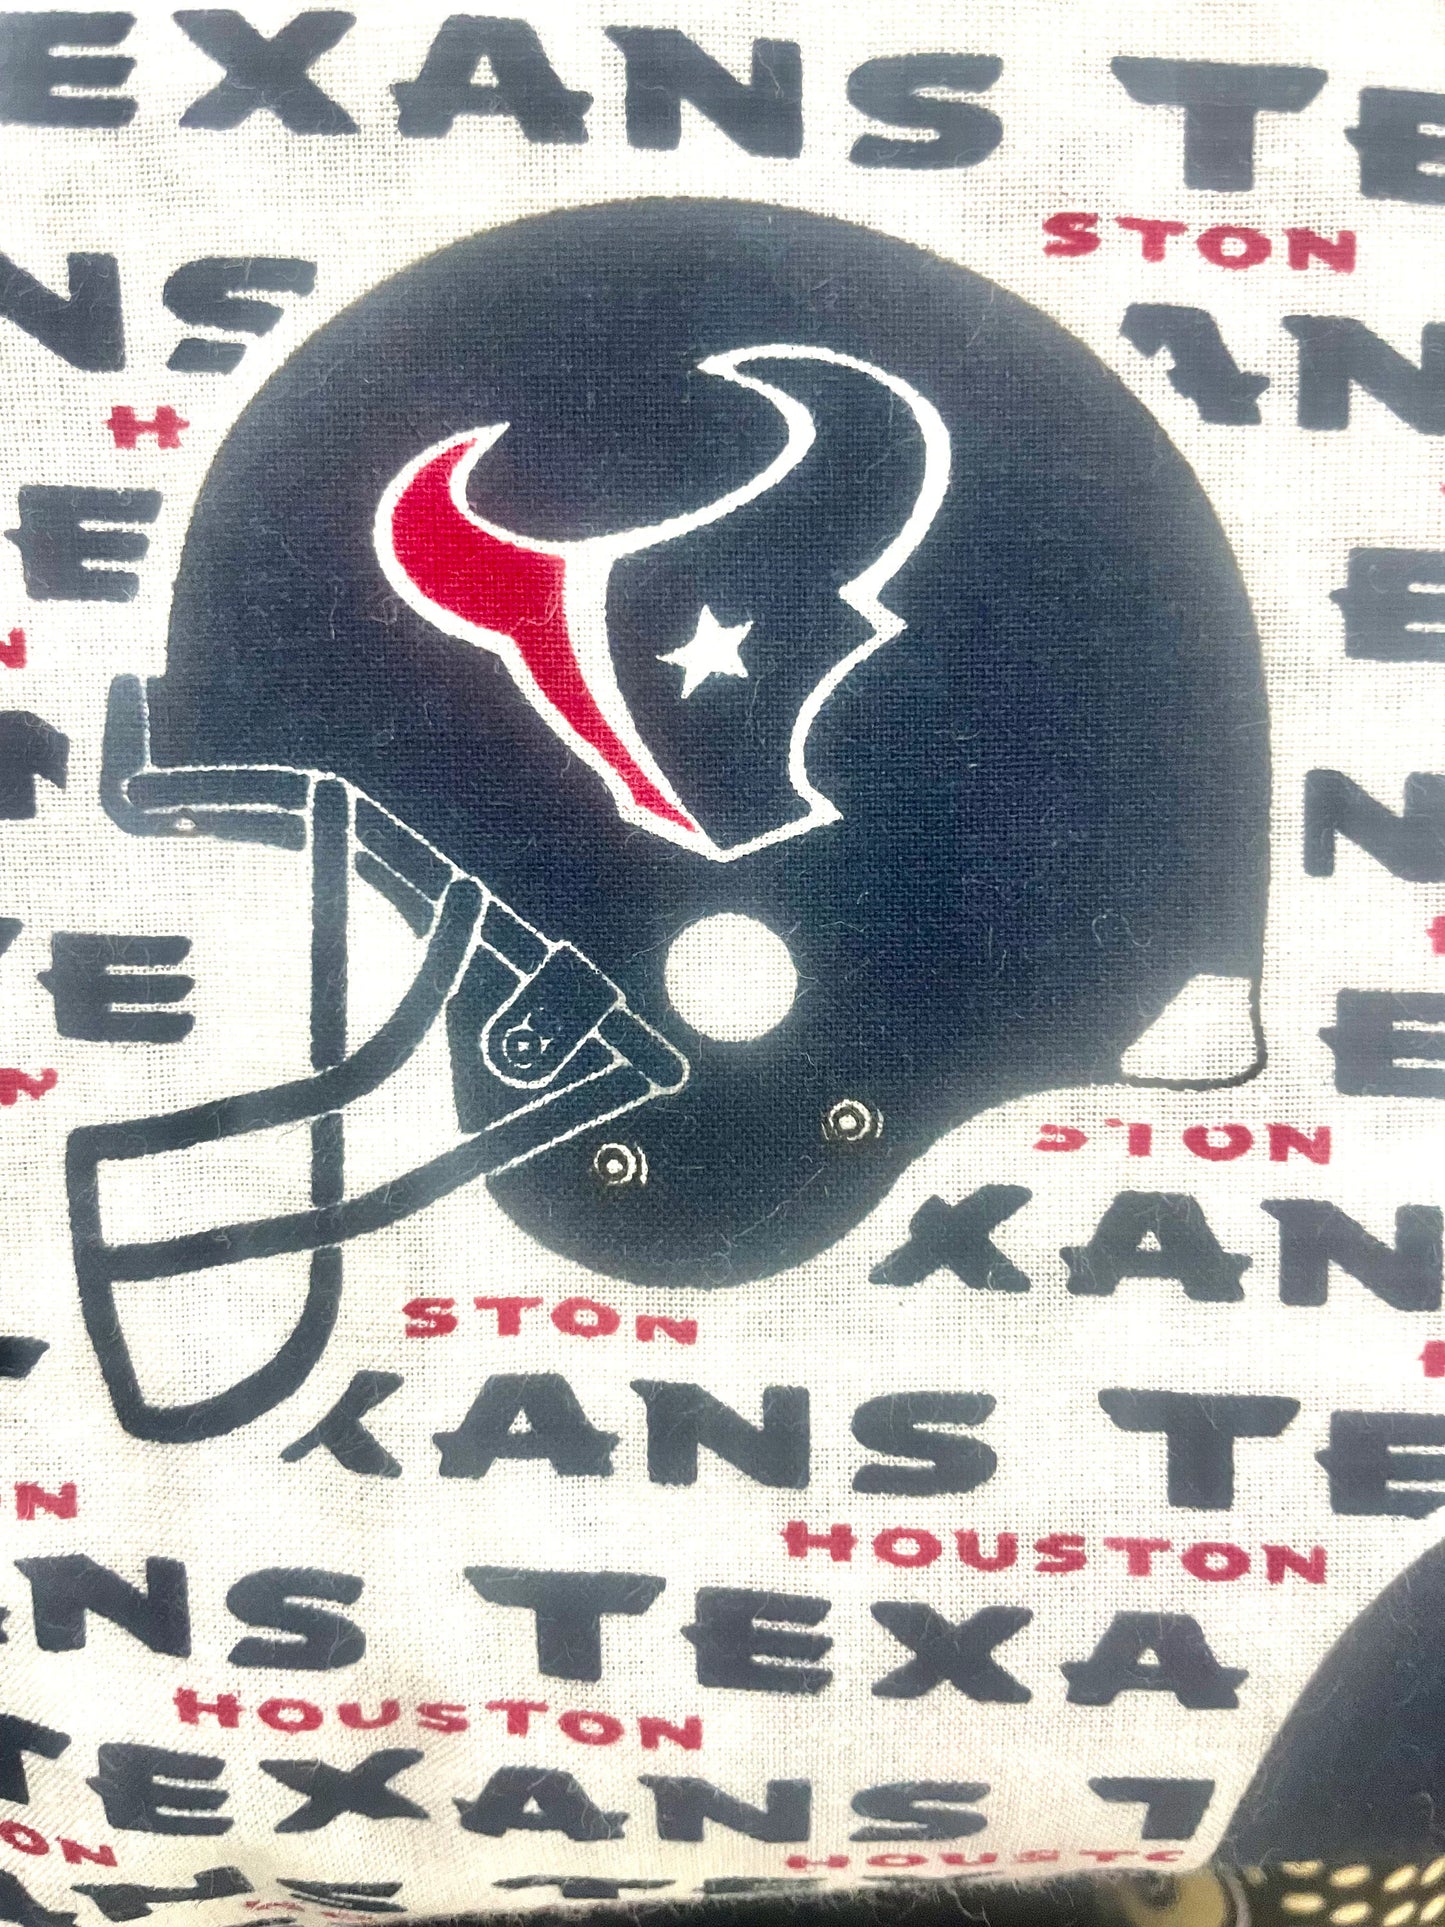 Best Houston Texans Blanket